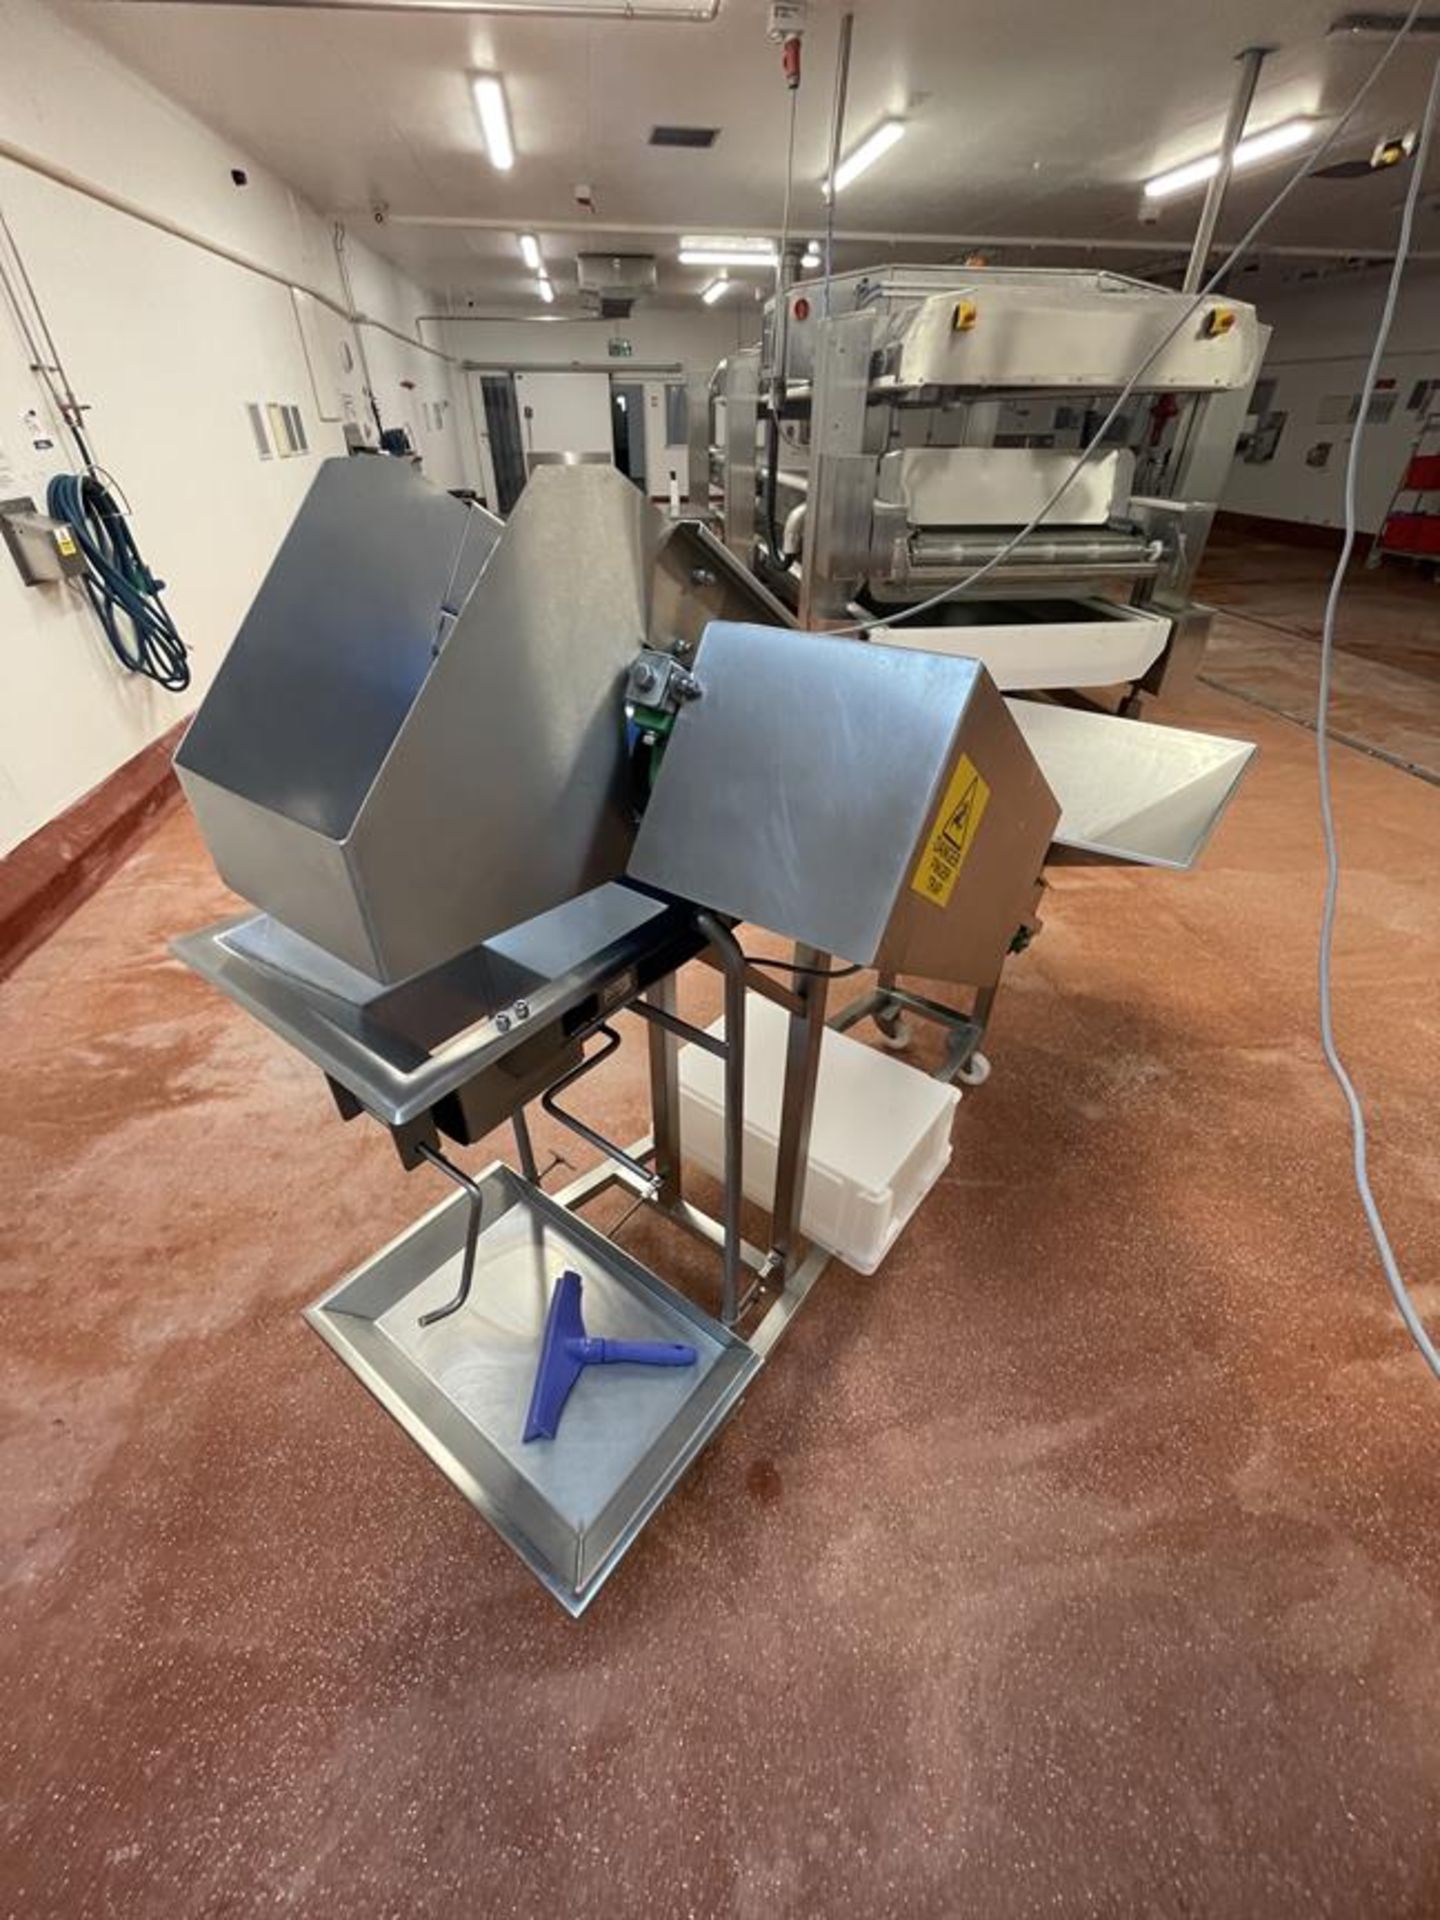 Jay Craft Food Machinery, slatter variable speed elevating conveyor with hopper - Image 2 of 3